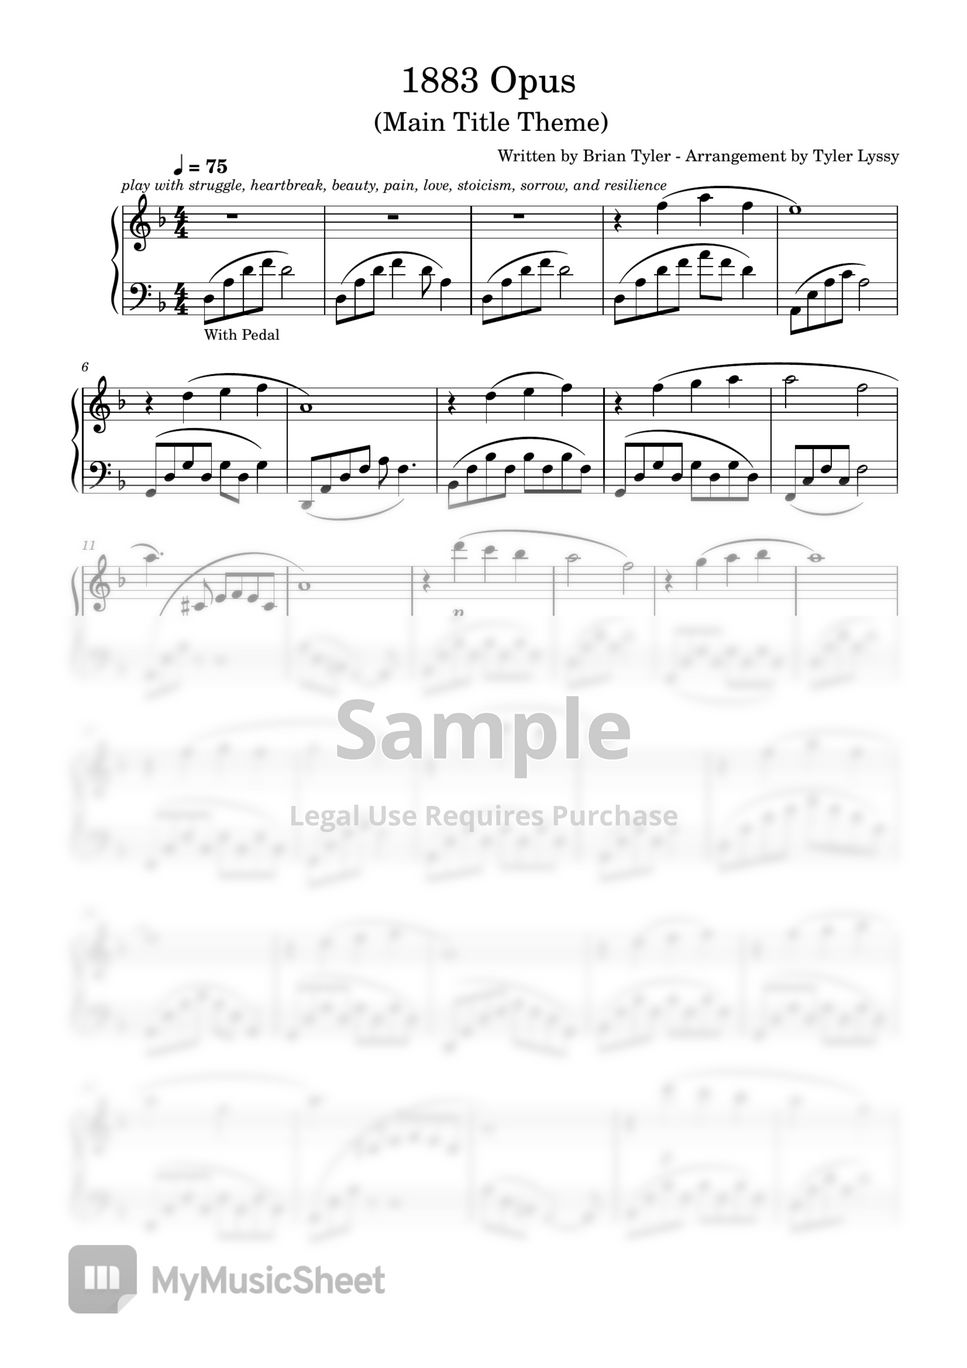 Brian Tyler - 1883 Opus (Main Title Theme) by Tyler Lyssy